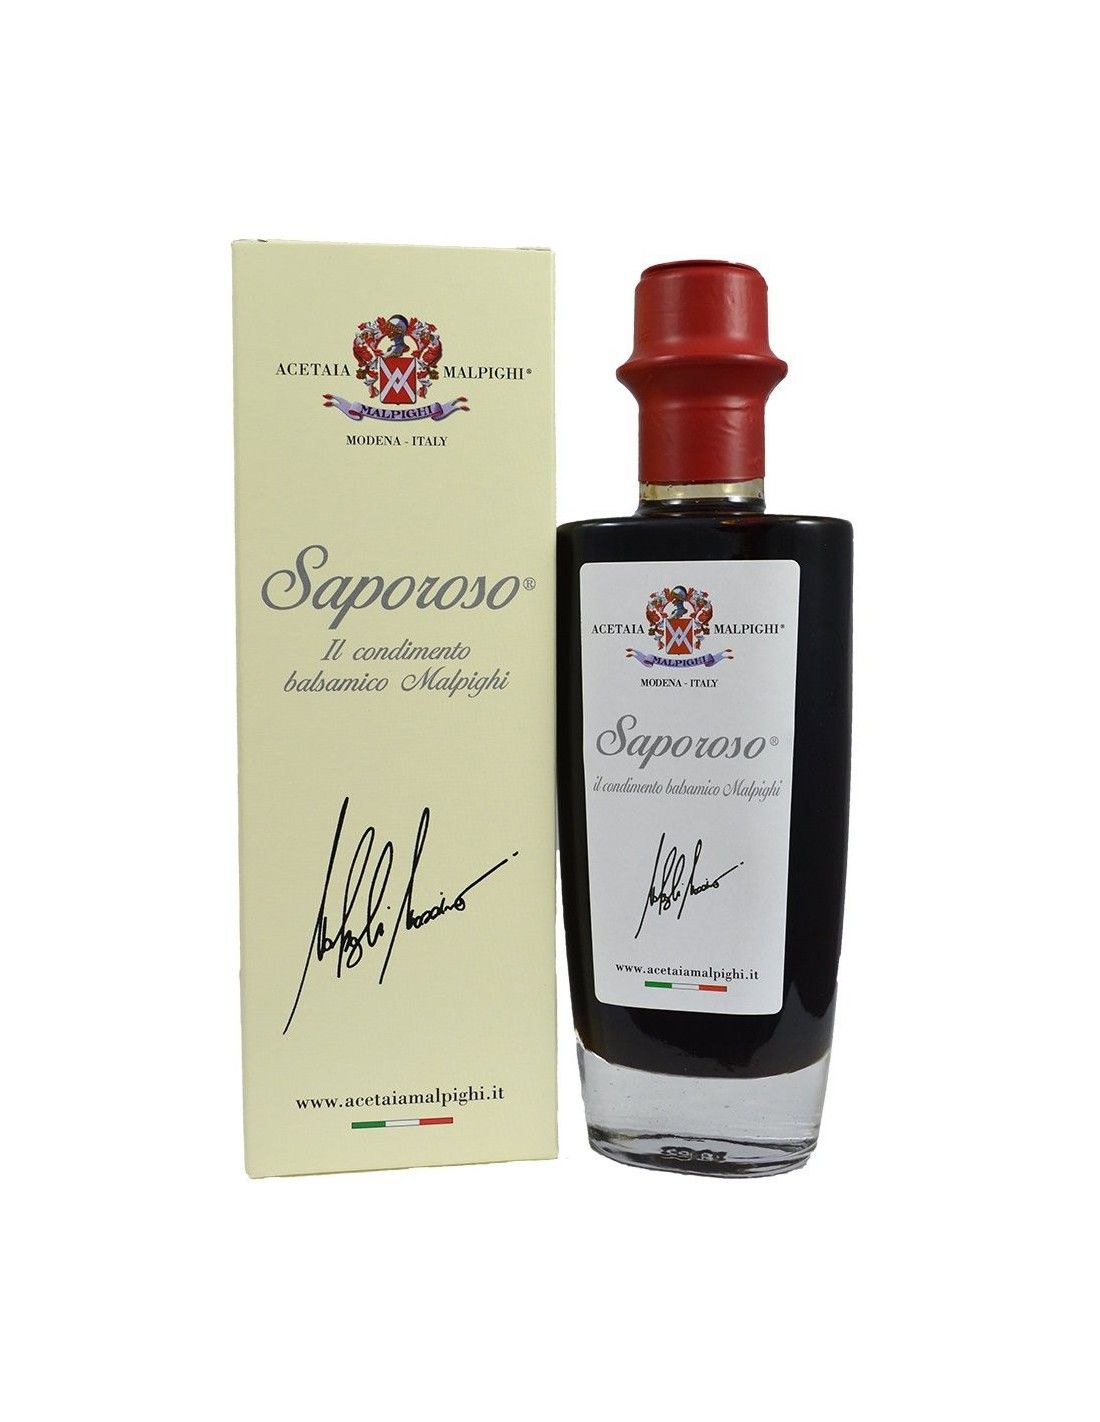 Parmigiano Reggiano PDO - From Hill - 24 Months (5 x 1.35 Kg. / 3 Lbs.) +  Saporoso (100 ml. / 3.38 fl. oz) 